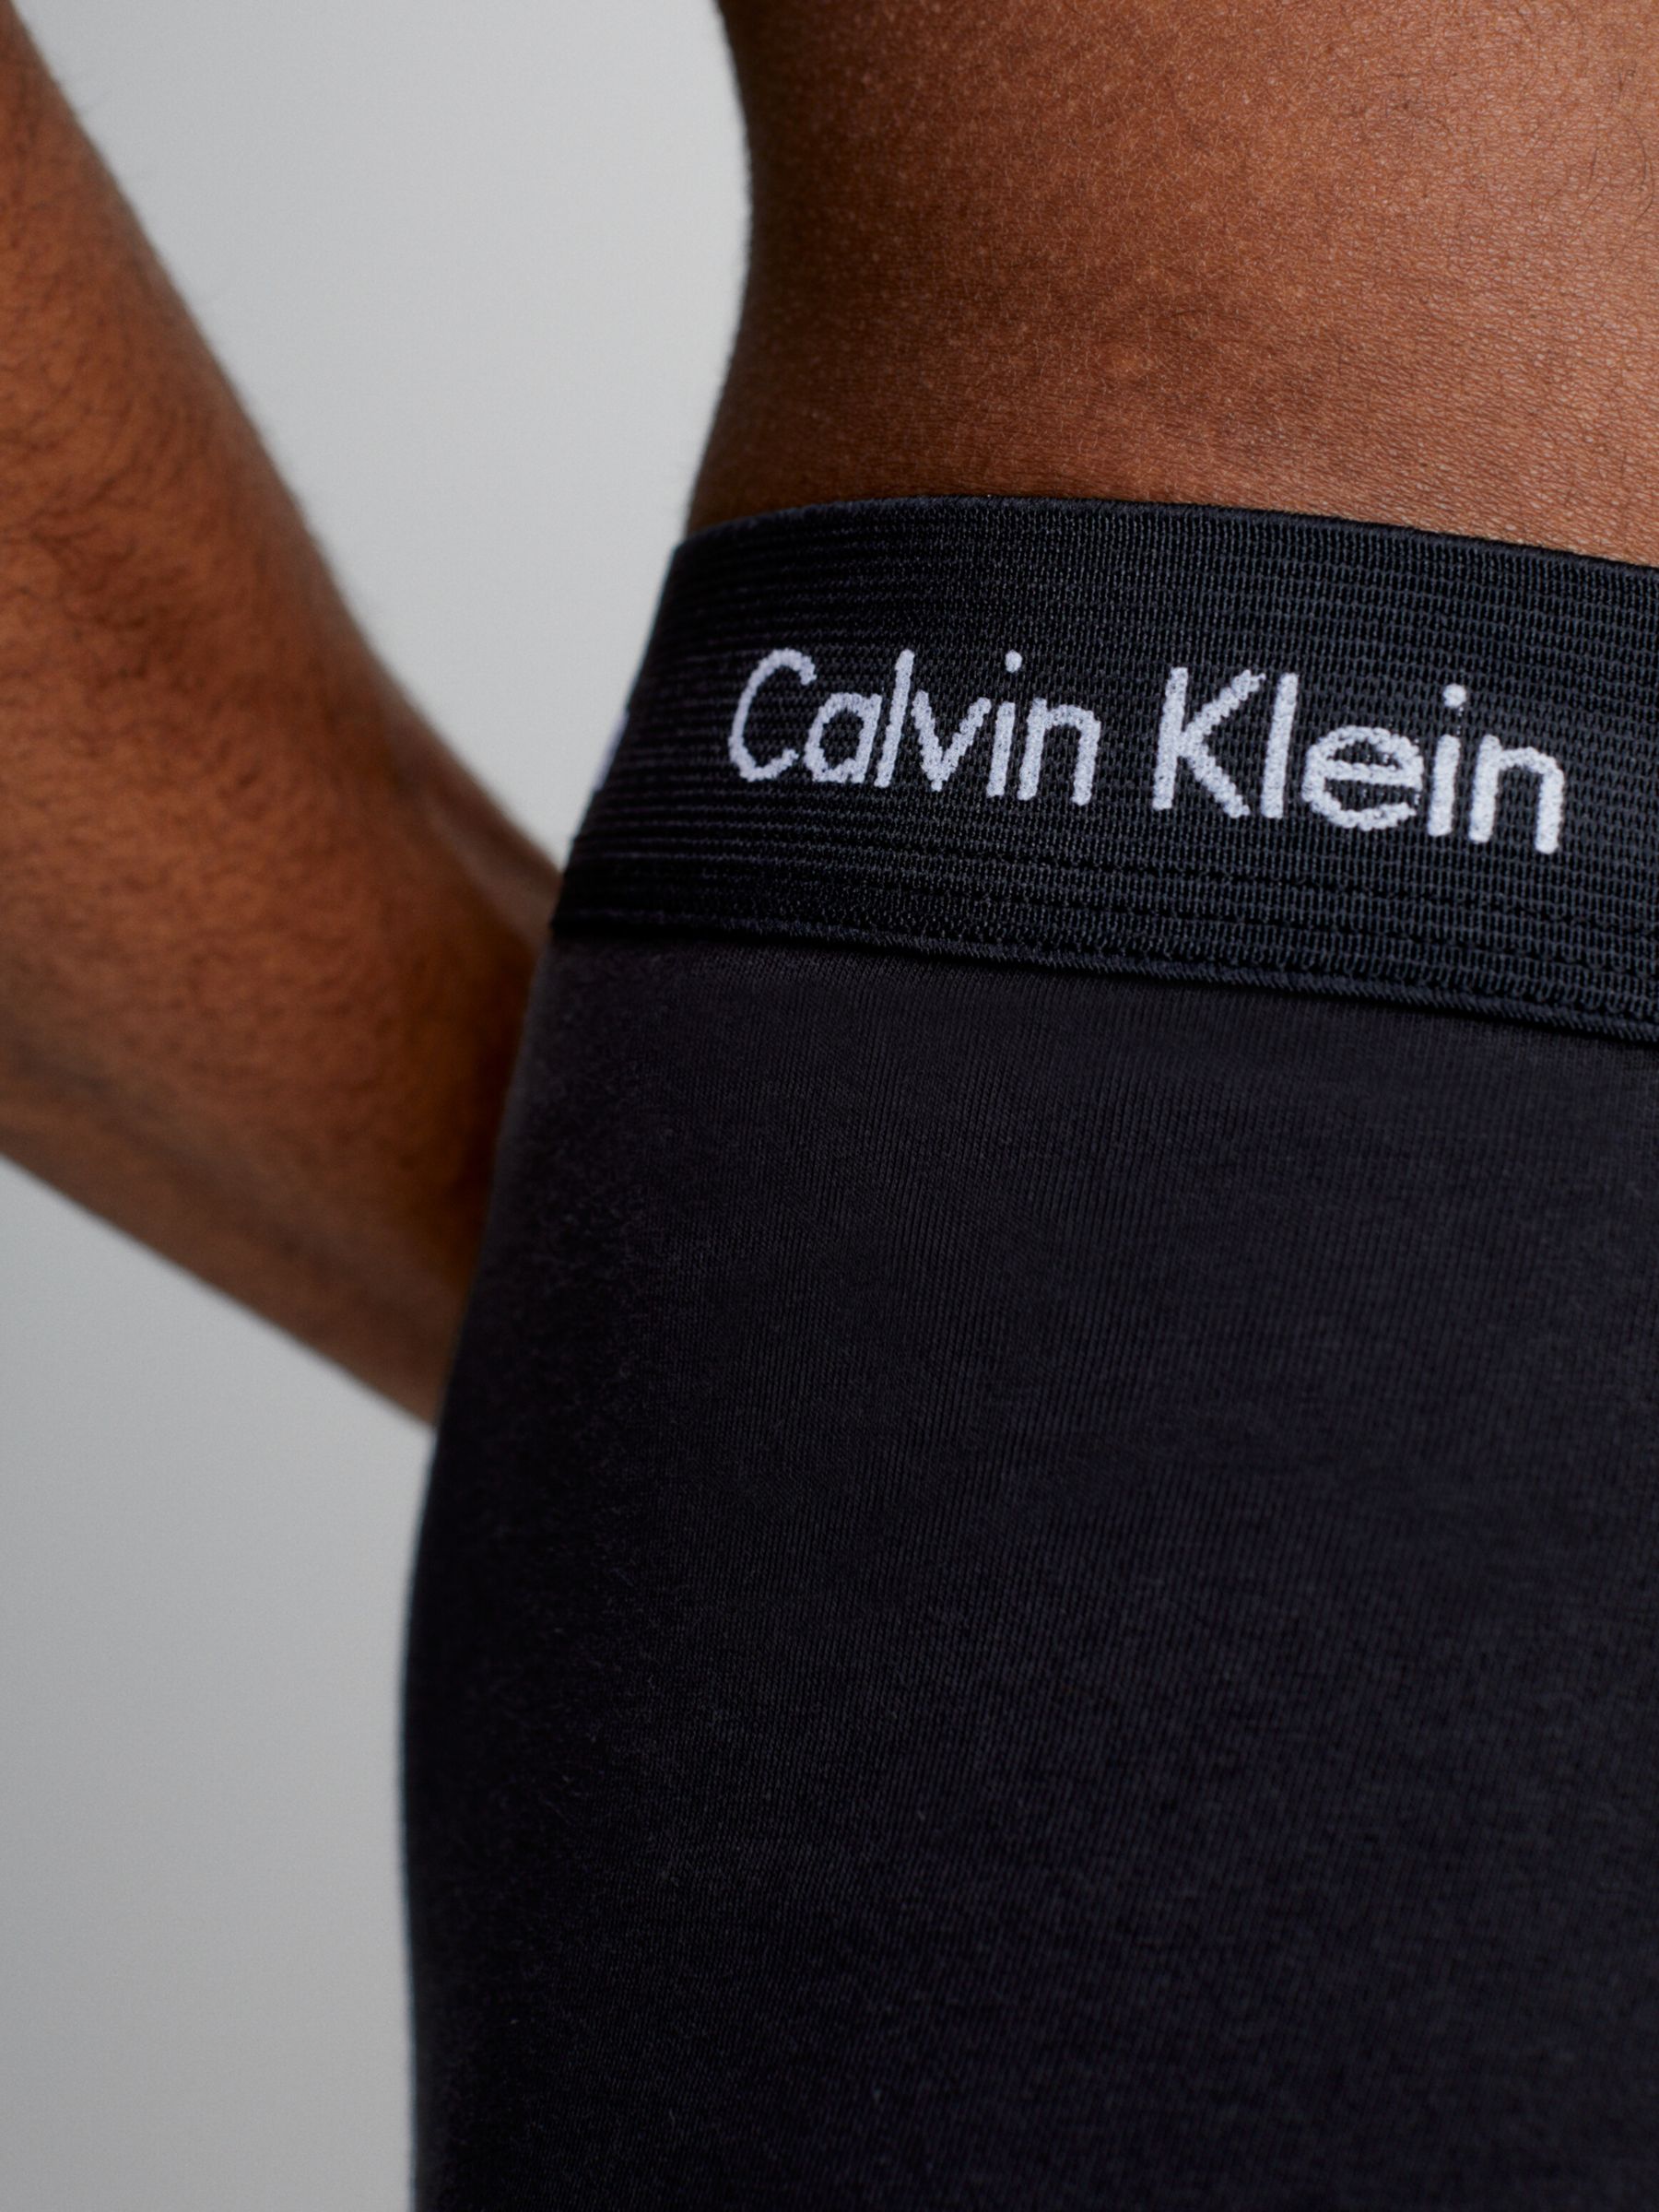 Calvin Klein  So comfortable you can sleep in it. Introducing